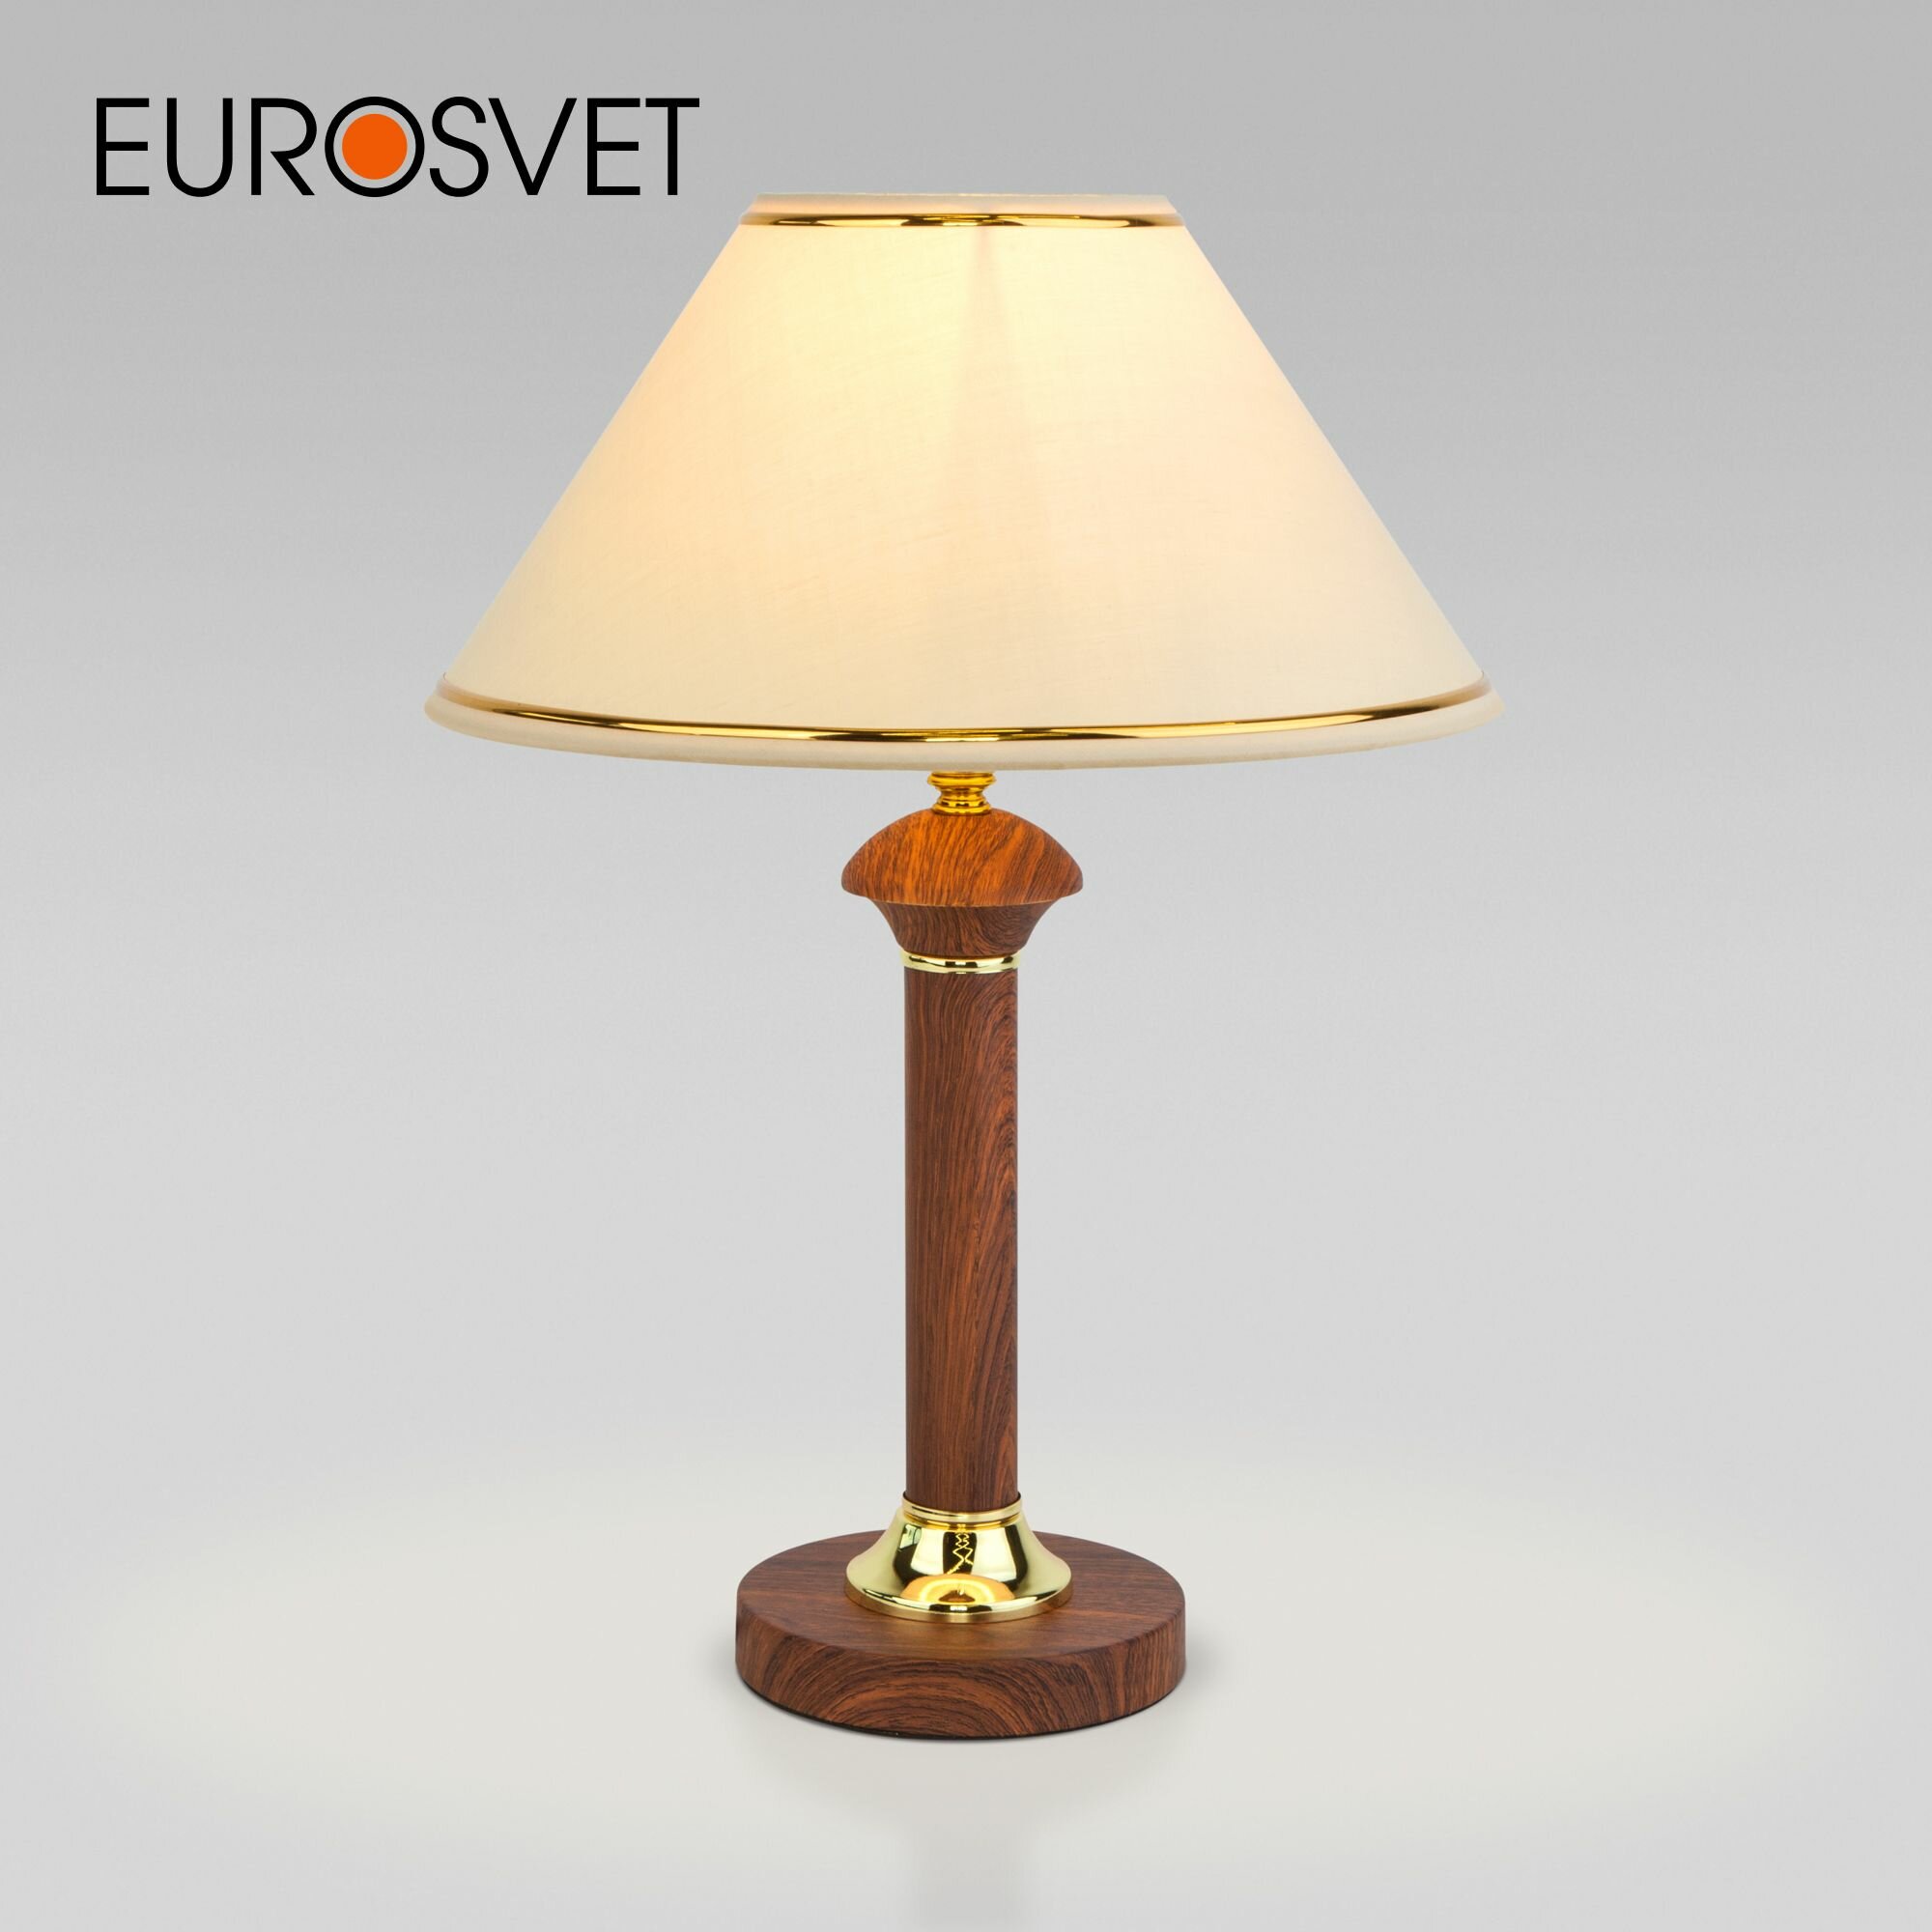 Классическая настольная лампа с абажуром Eurosvet Lorenzo 60019/1, цвет орех